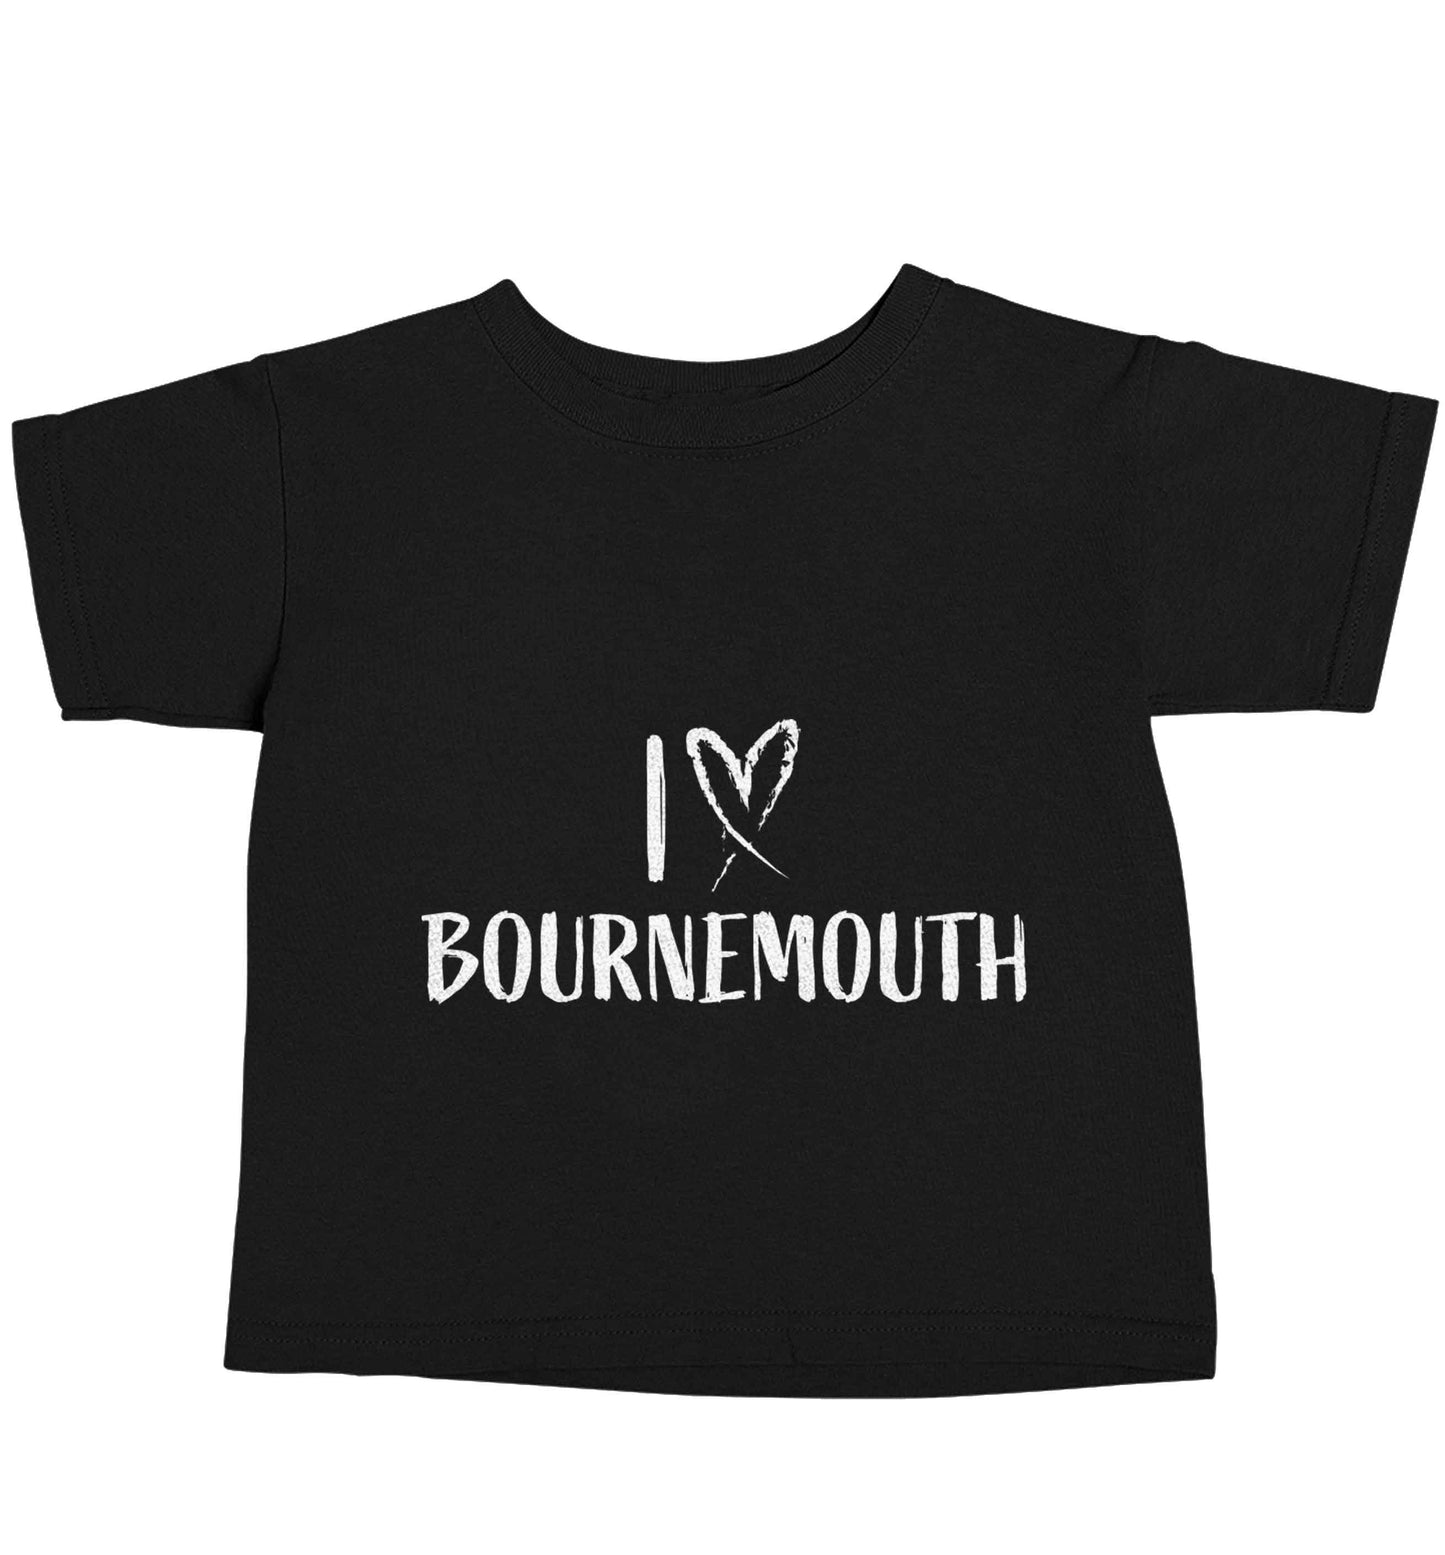 I love Bournemouth Black baby toddler Tshirt 2 years